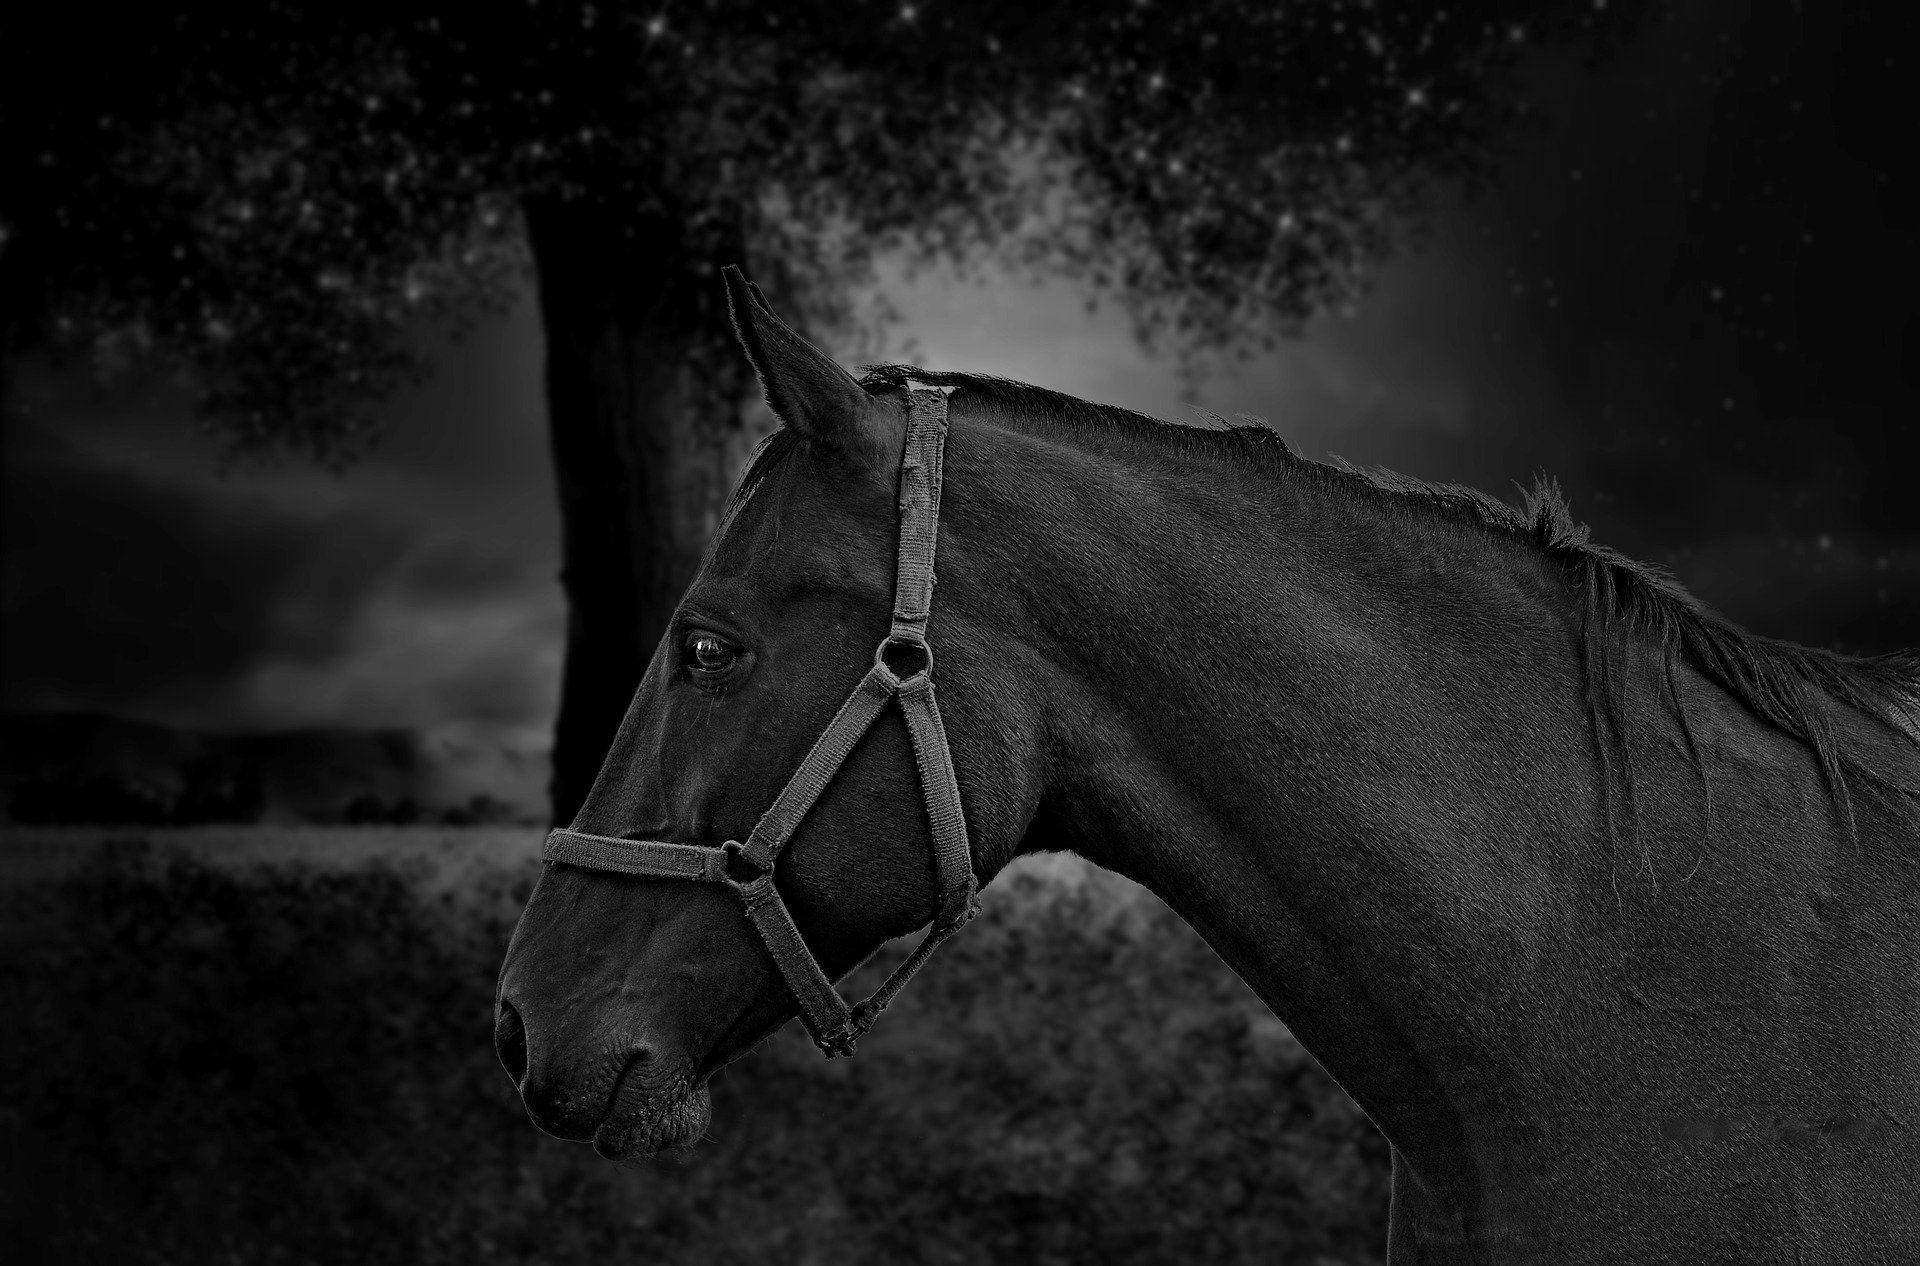 Dark Horse Hd Wallpapers - Top Free Dark Horse Hd Backgrounds